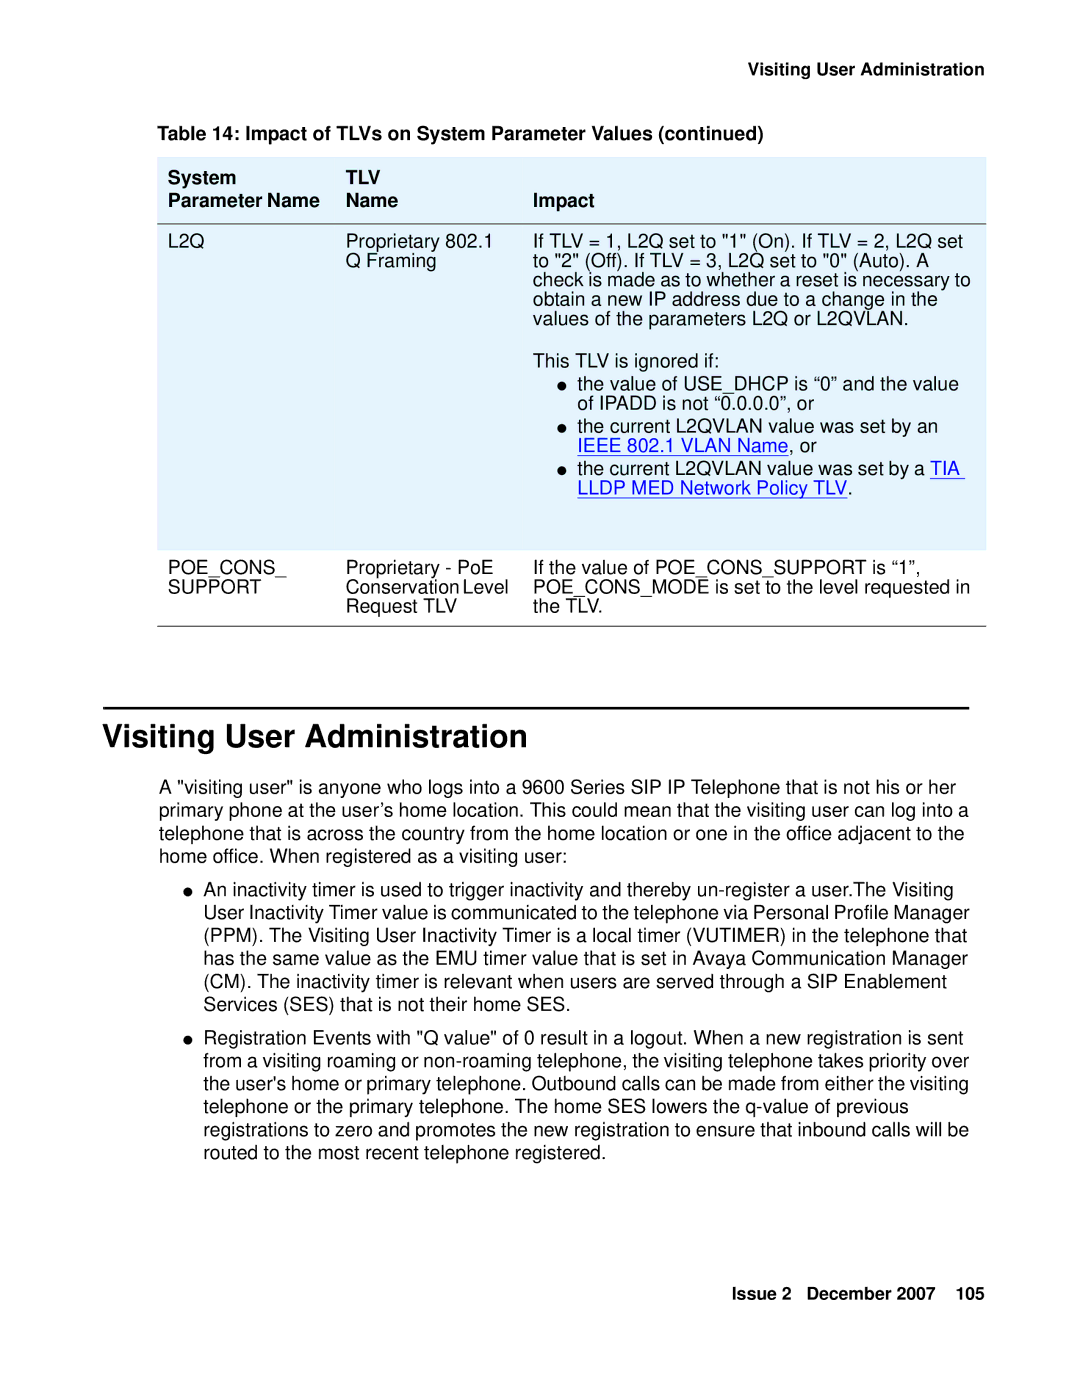 Avaya 9600 manual Visiting User Administration, Poecons, Support 